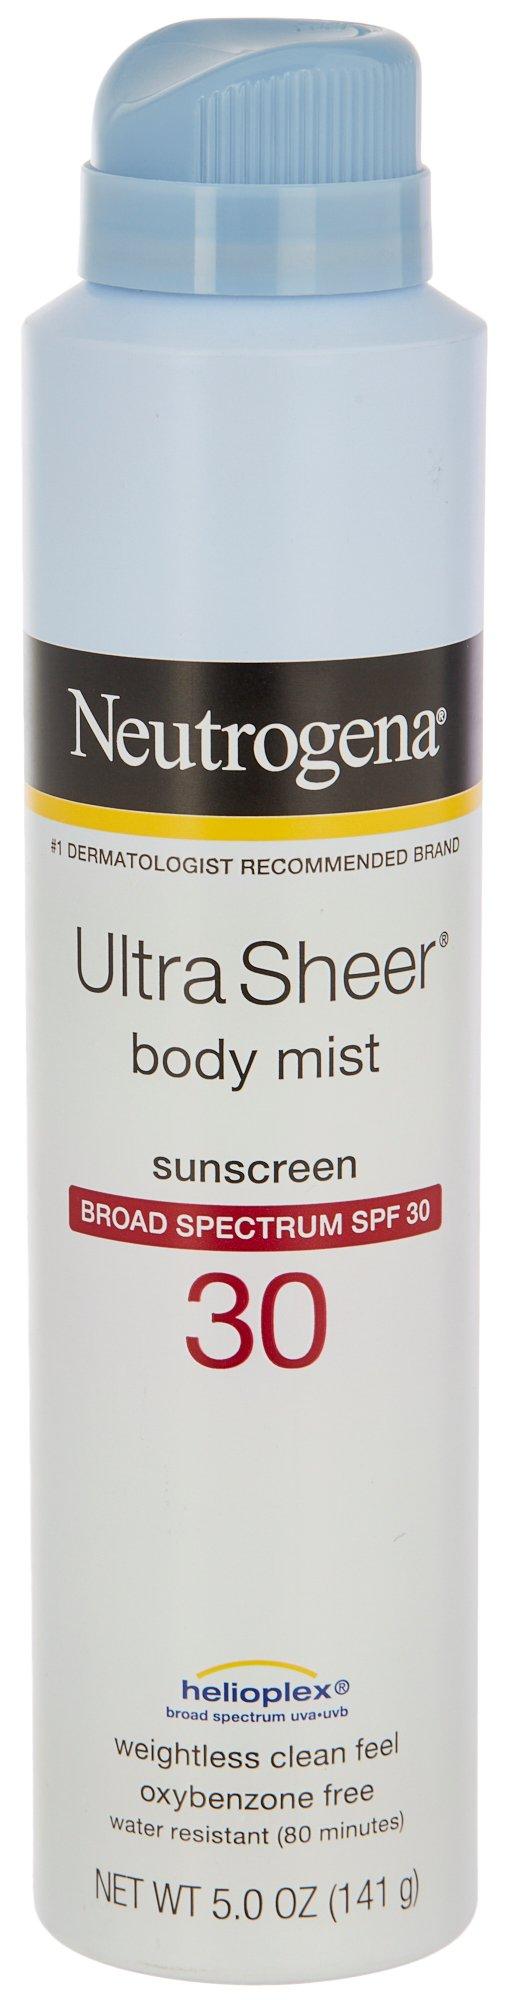 Neutrogena Ultra Sheer Body Mist SPF 30 Sunscreen Spray 5 oz